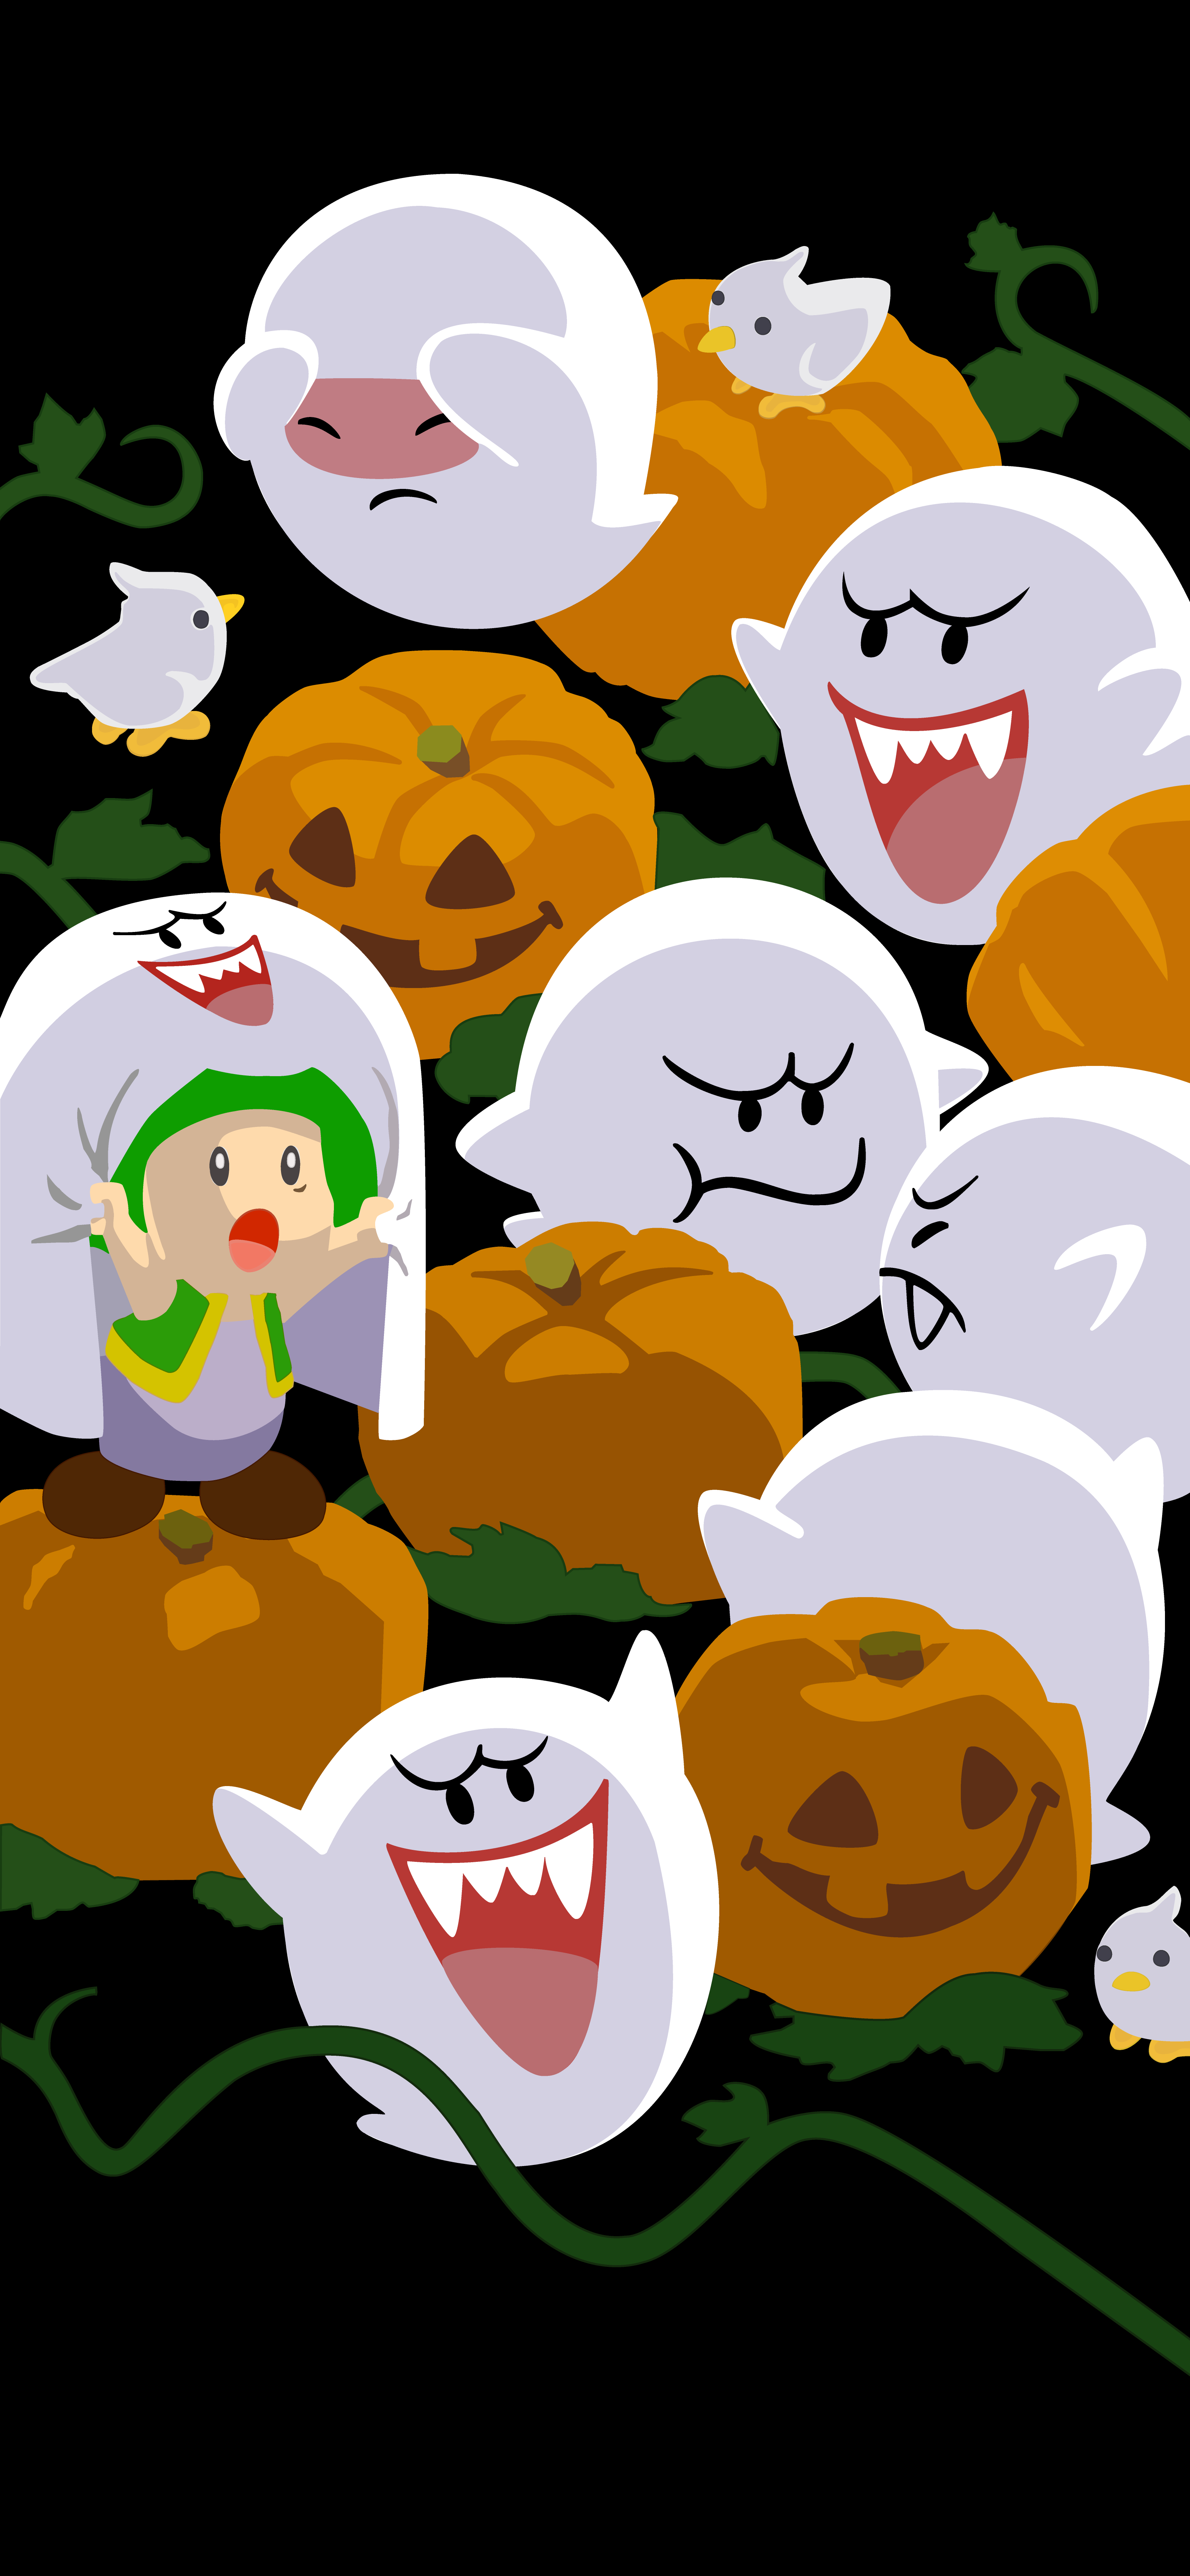 Halloween Wallpaper from Nintendo Japan